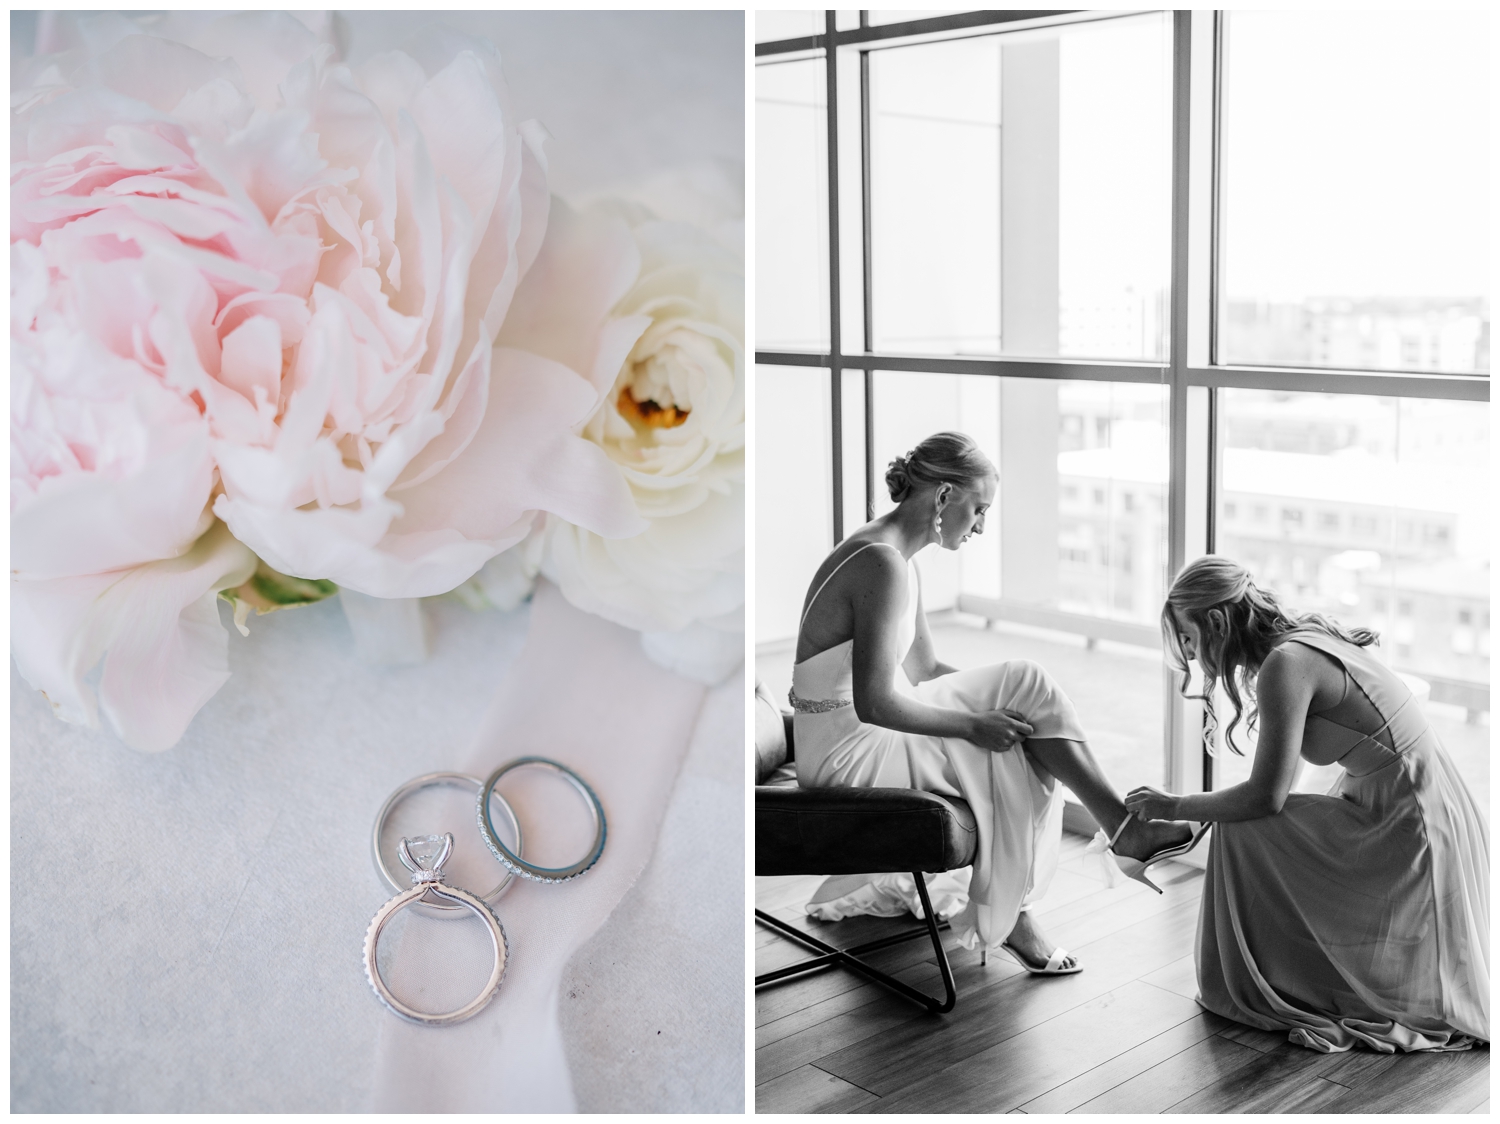 Buffalo Wedding,Curtiss Hotel,Hannah Bryerton Photography,June Summer Weddings,Lake Erie Brides,WNY Photographer,